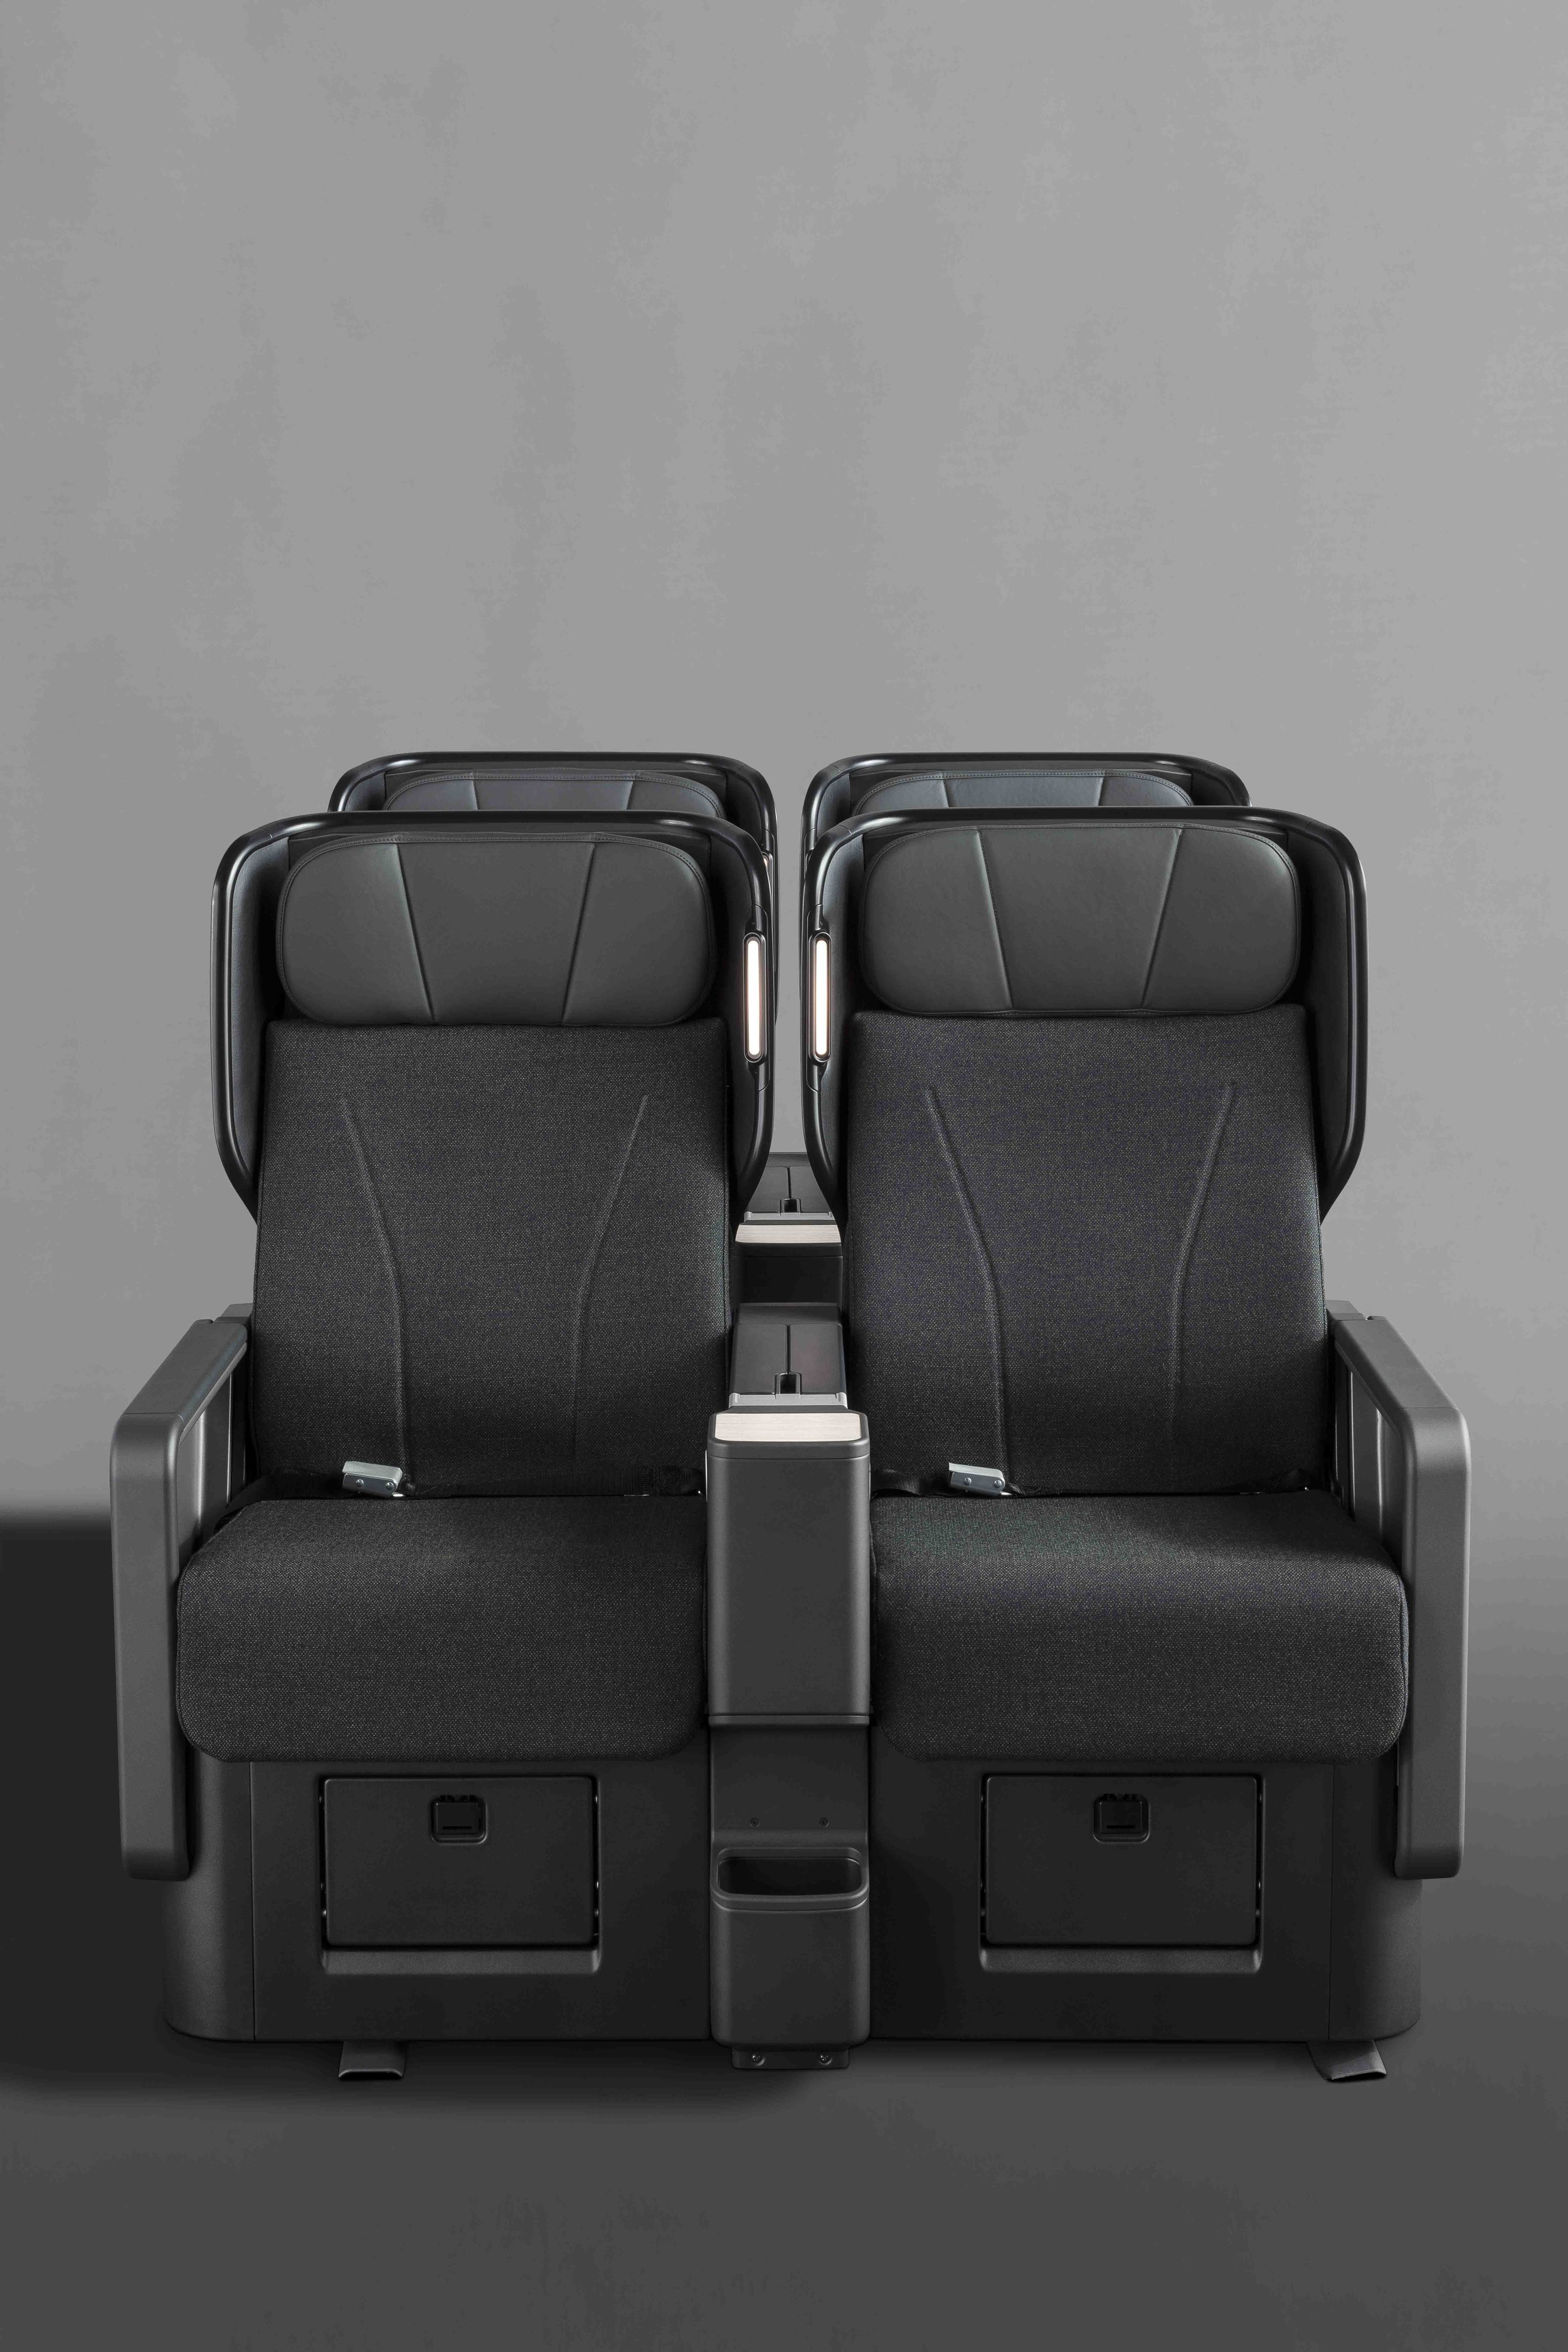   Qantas 787 Dreamliner Premium Economy Seats by Caon Studio  